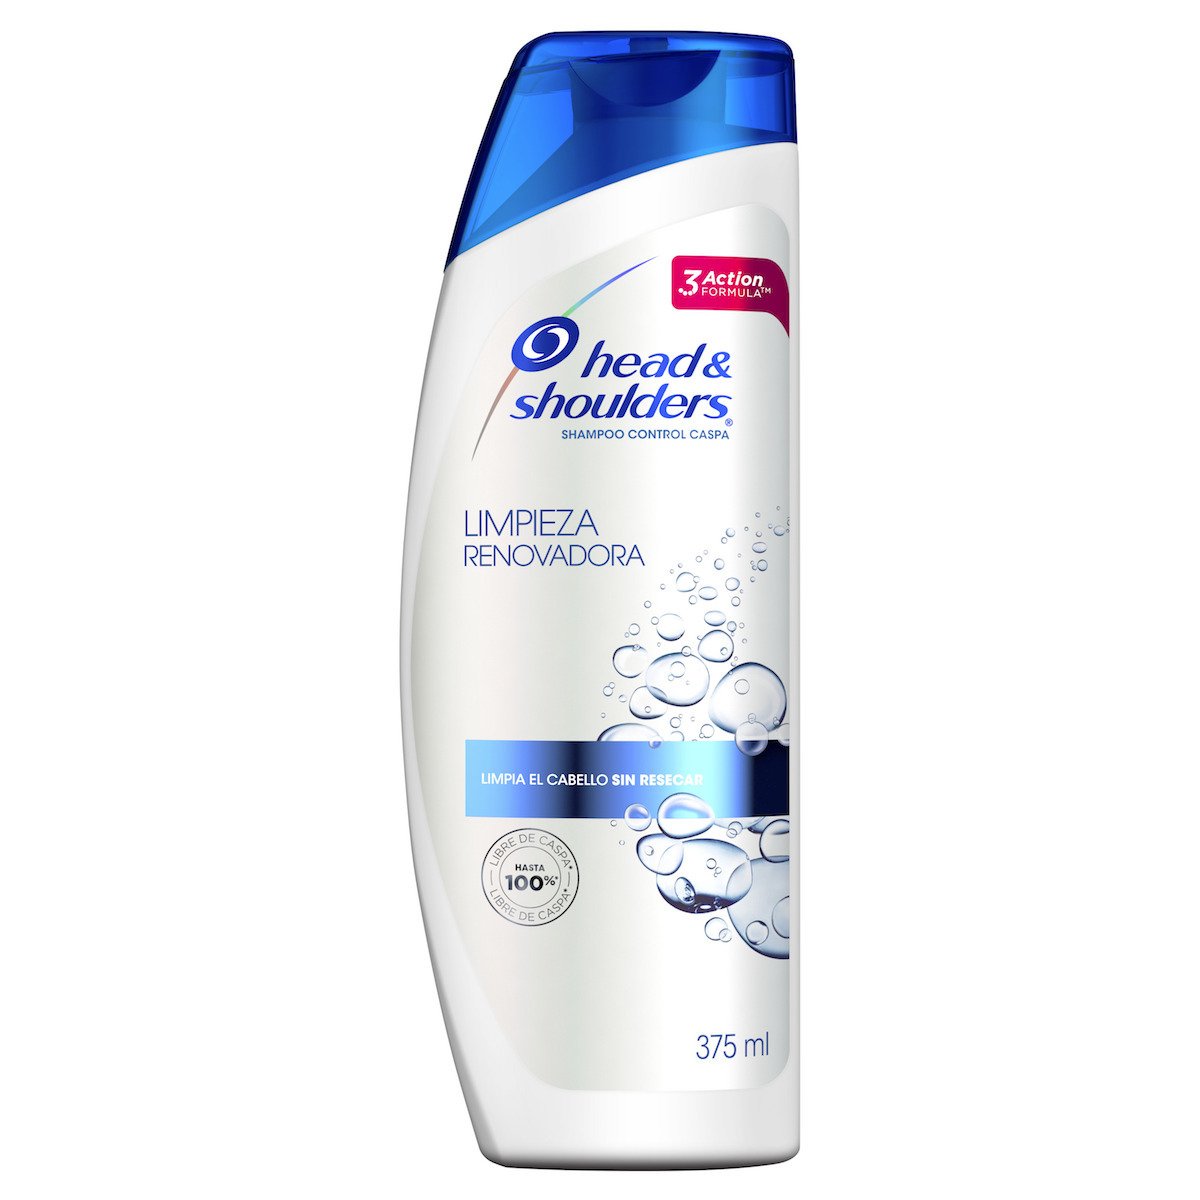 EAN 7500435019828 product image for 7500435019828 375 ml Limpieza Renovadora Shampoo | upcitemdb.com